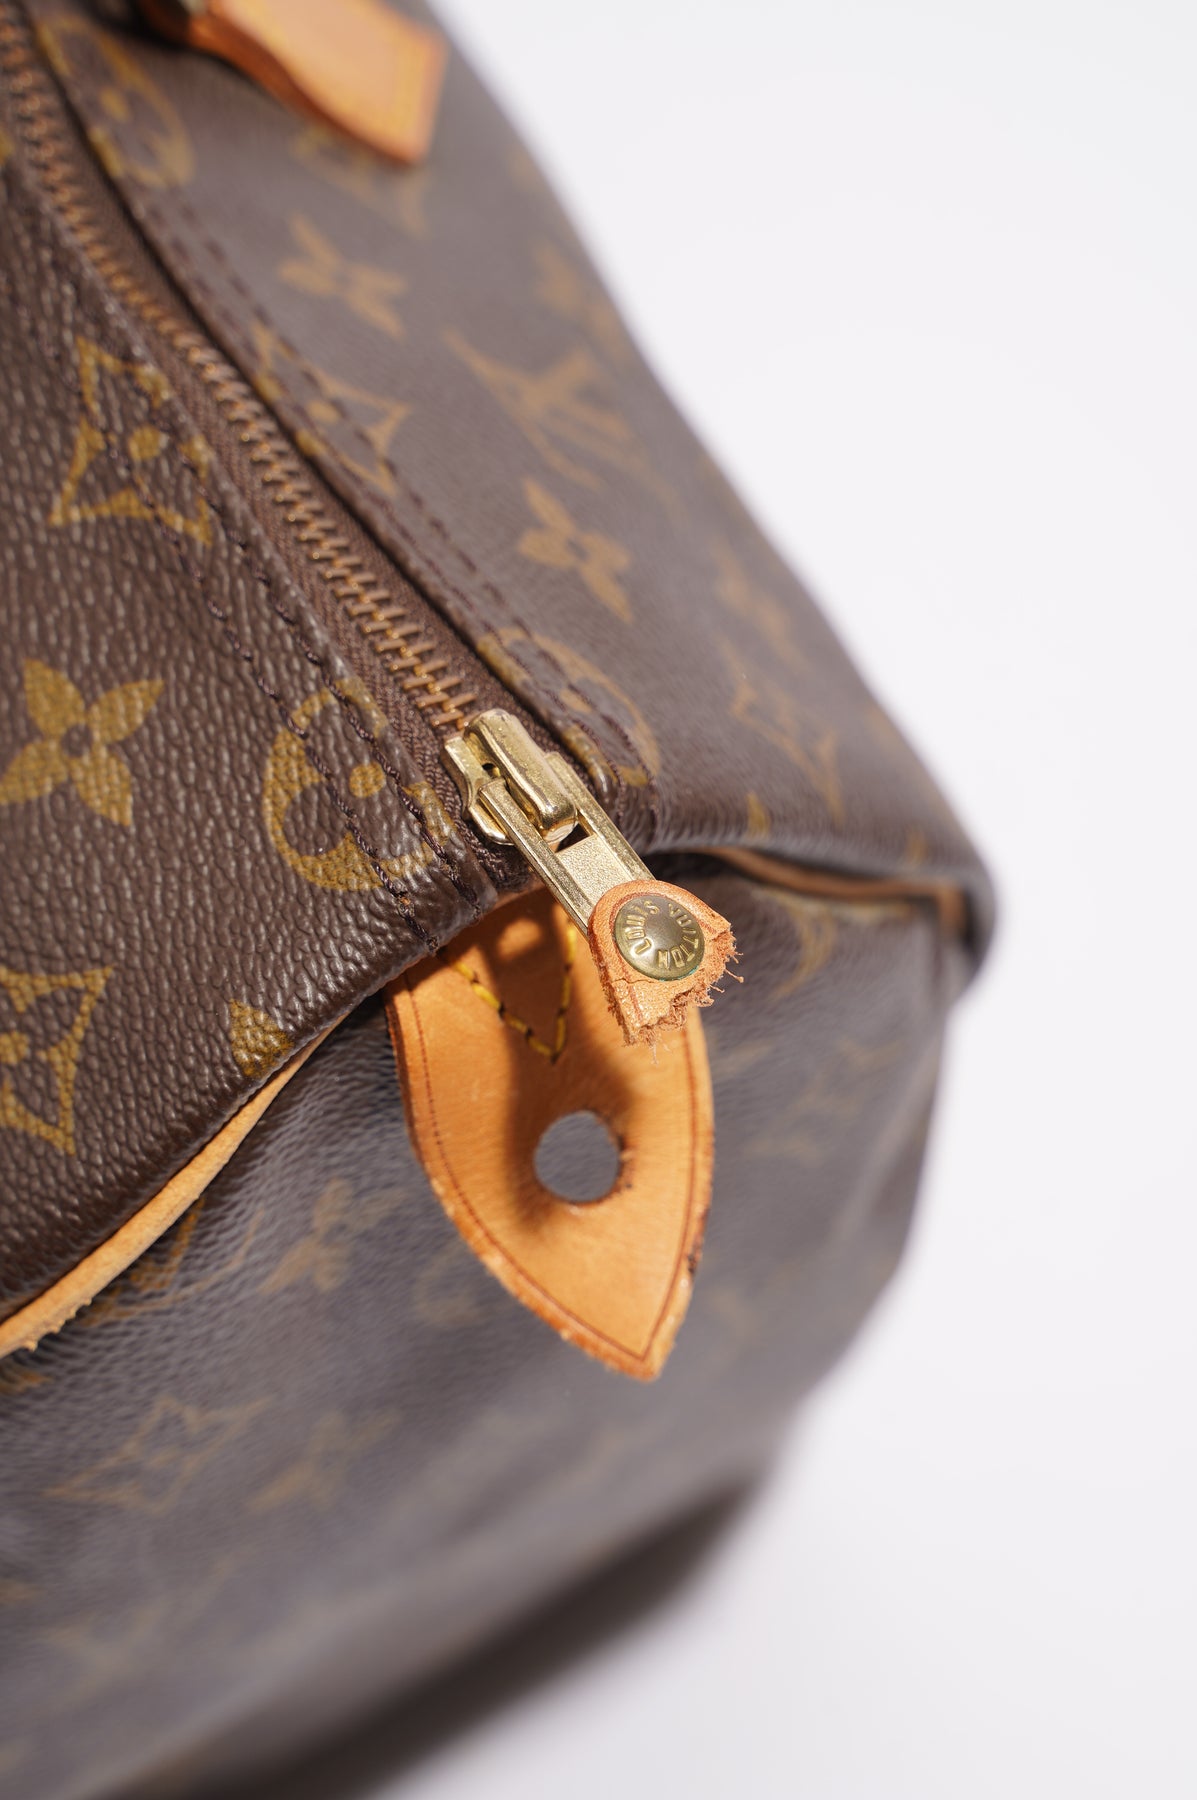 Louis Vuitton Speedy 35 Monogram Canvas Shoulder Bag